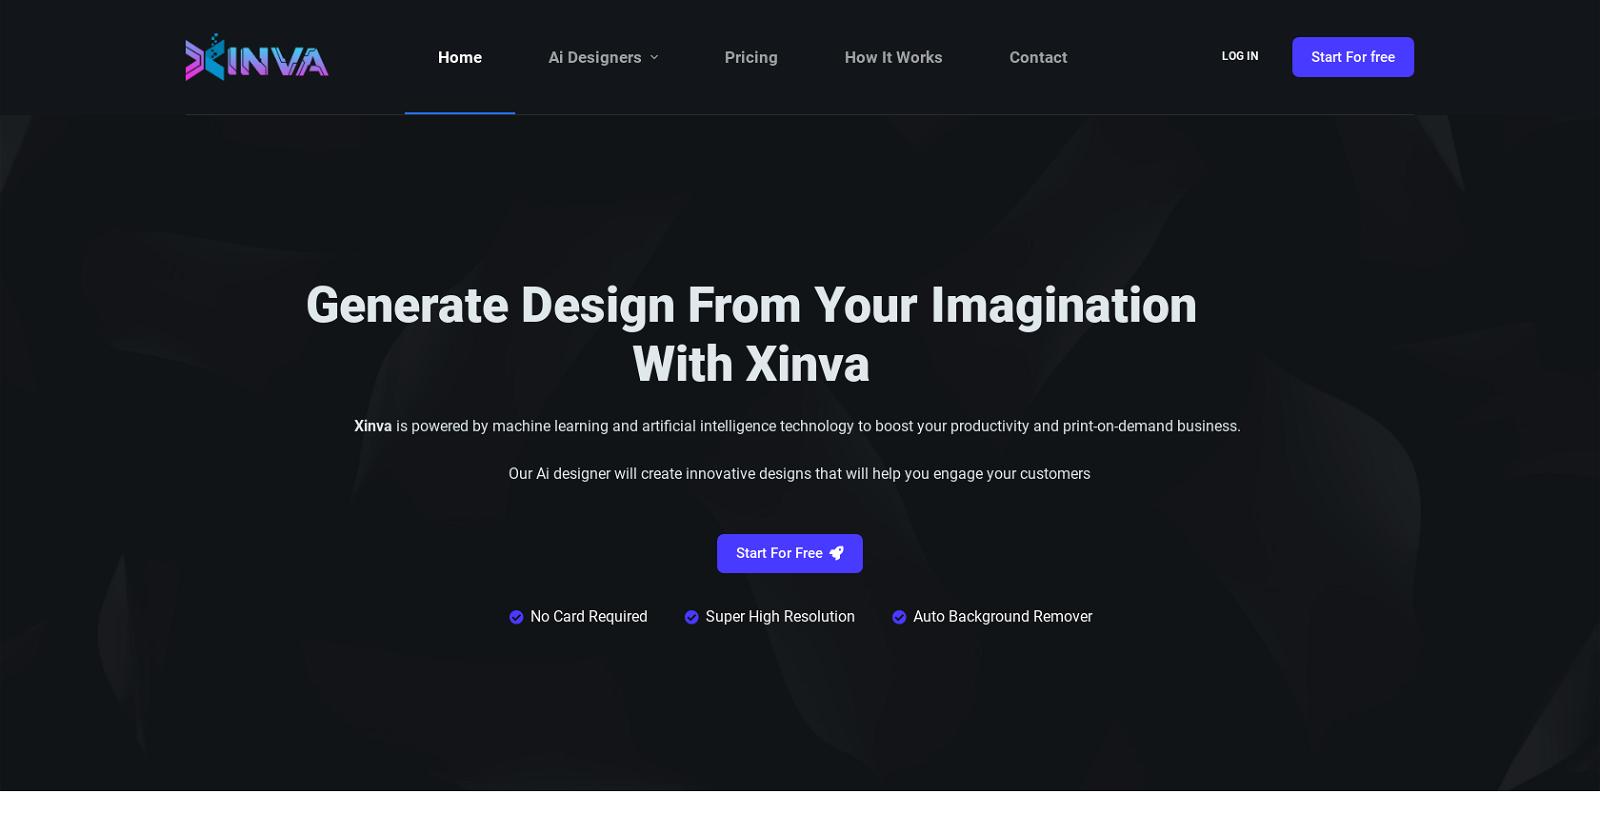 Xinva website